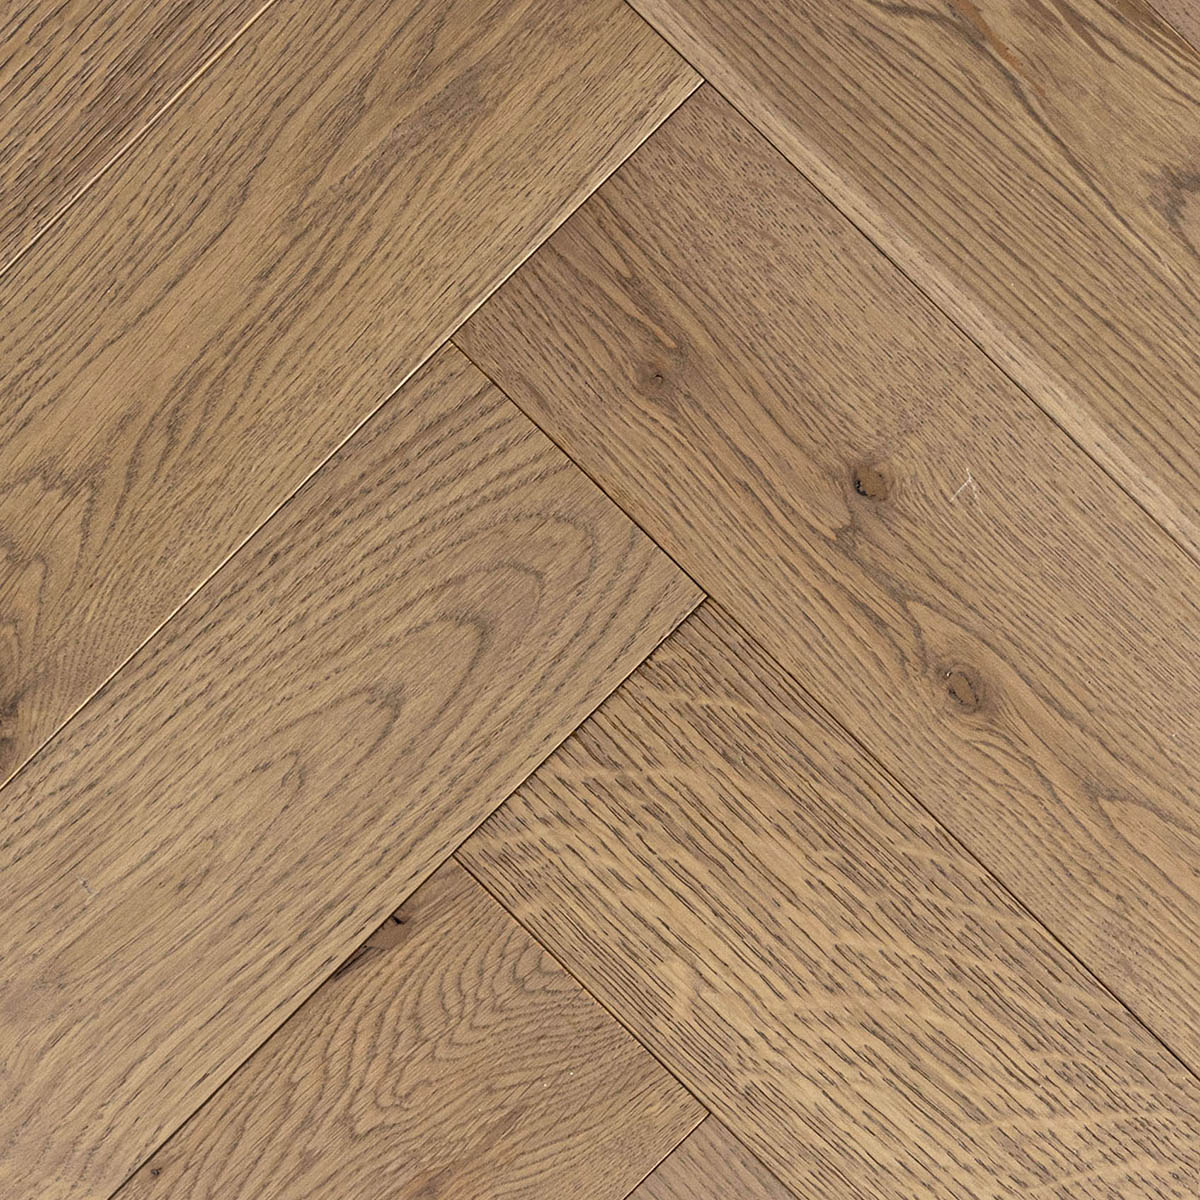 Winsland Lane - Brushed Oiled Herringbone Wood Floor 